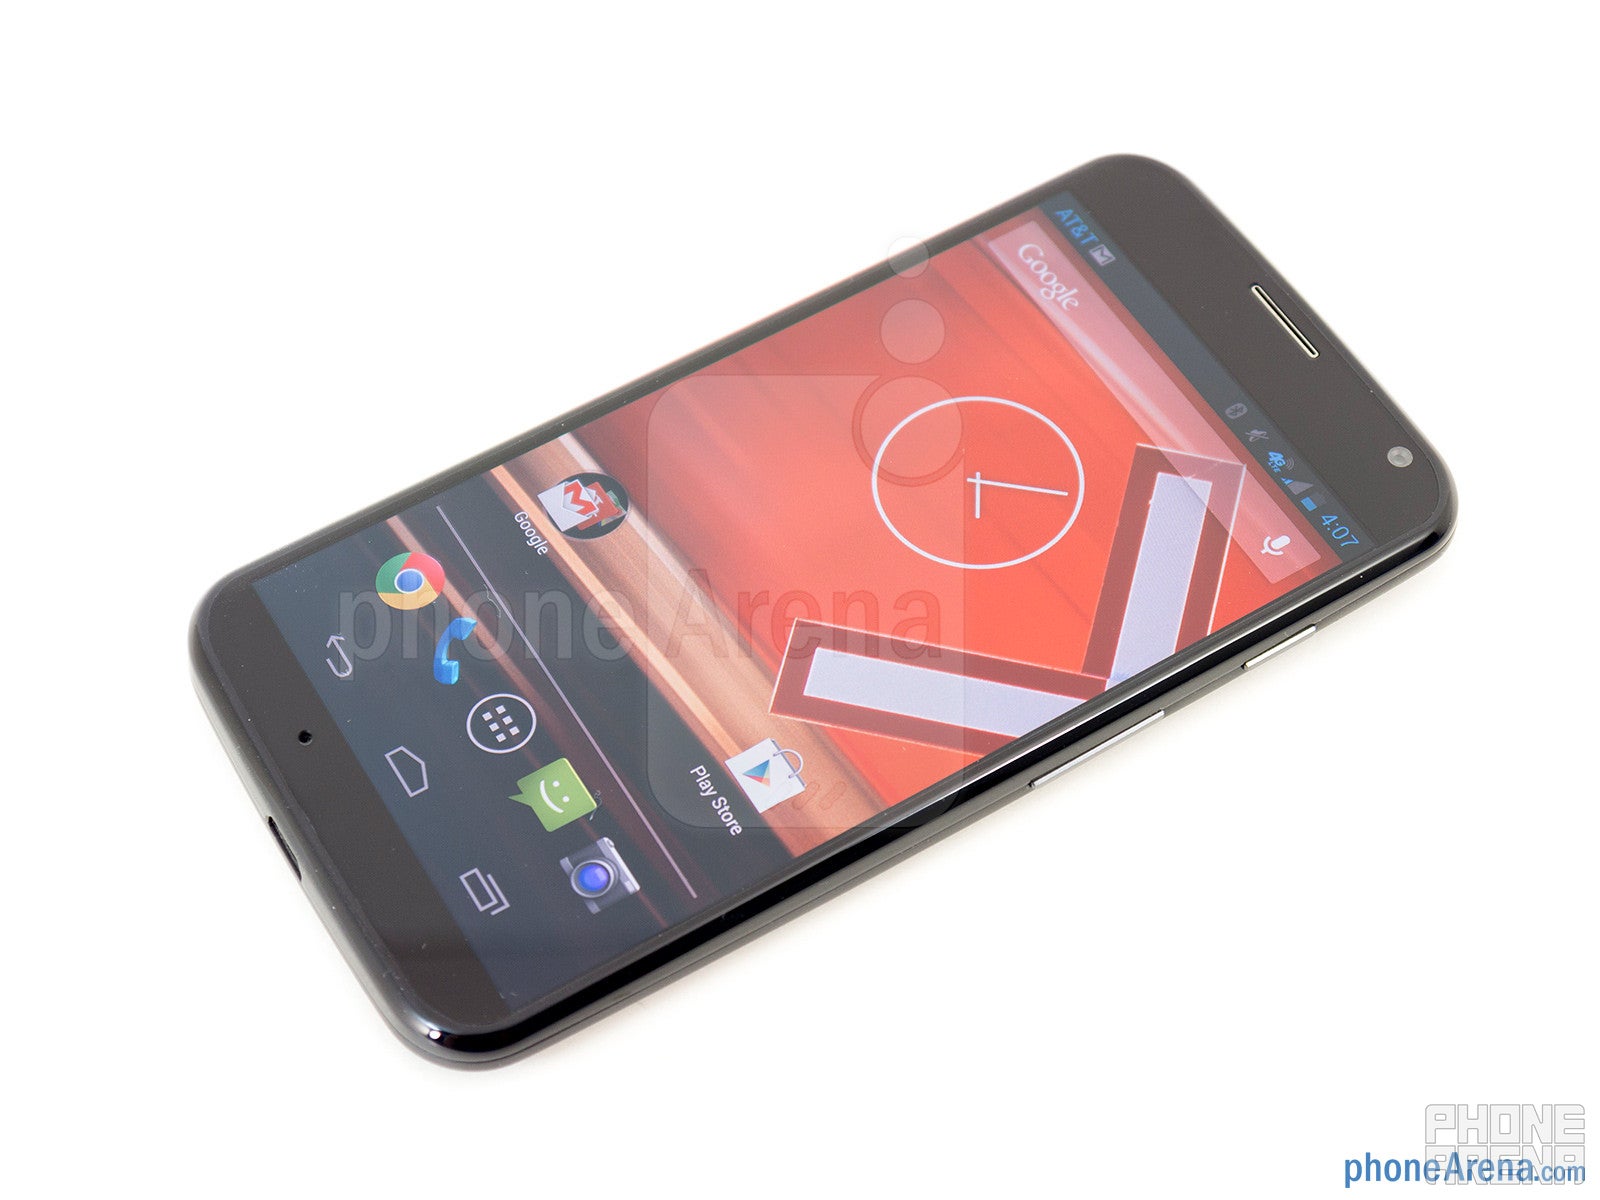 Motorola Moto X 2013 Review